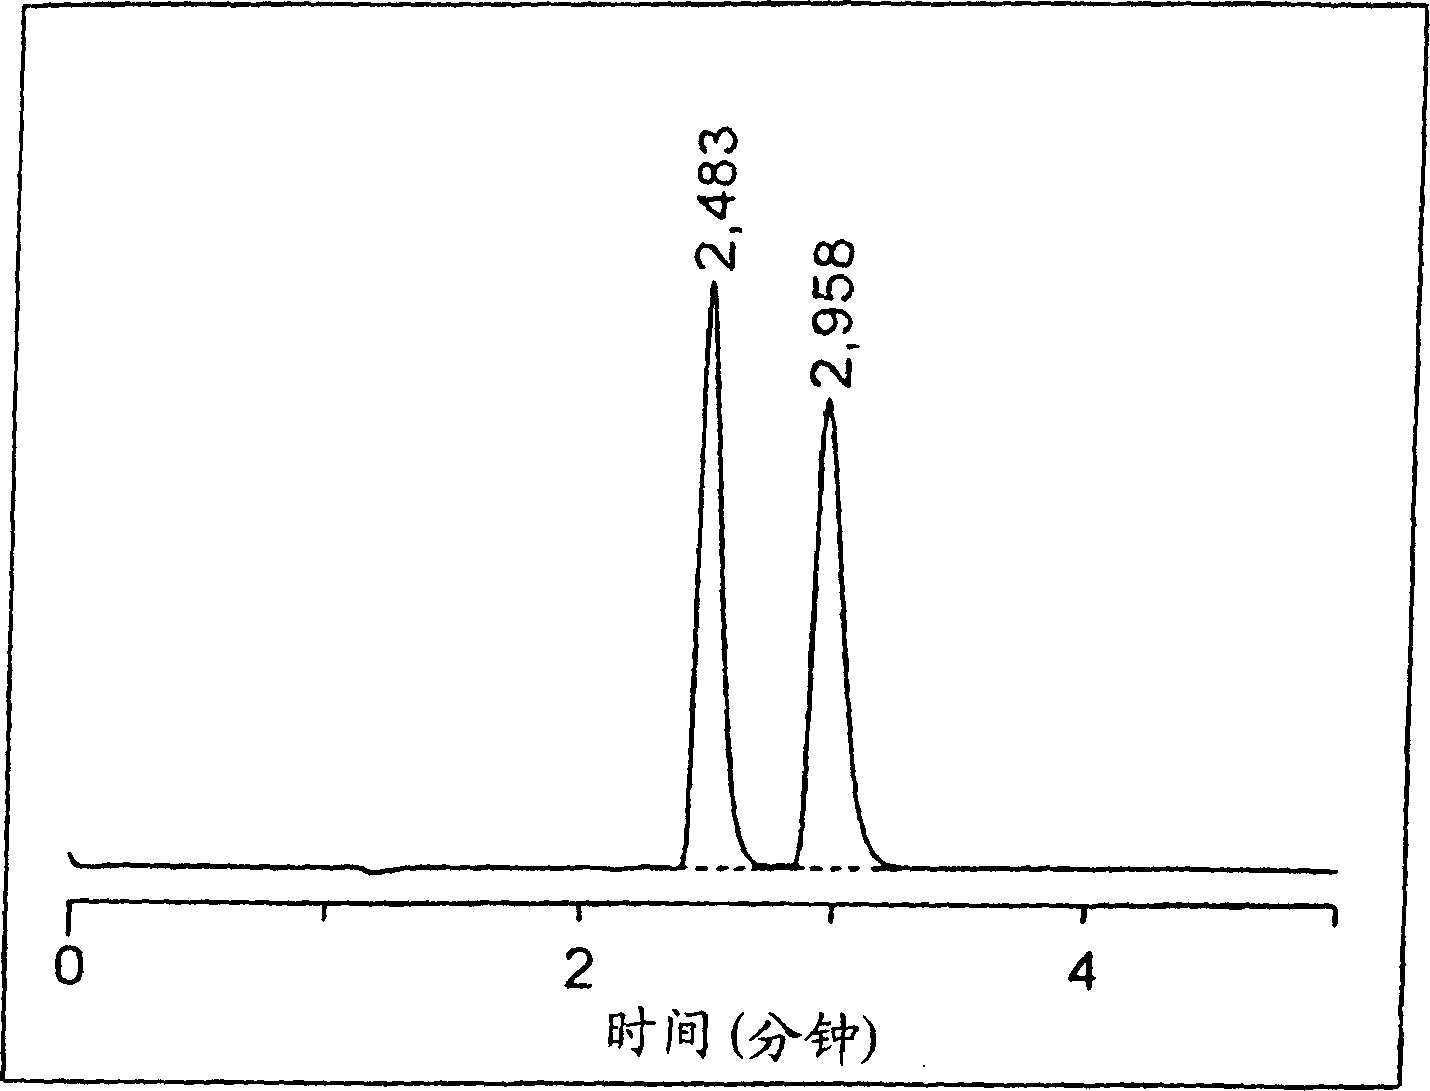 Method of optical isomer separation with use of supercritical fluid chromatography